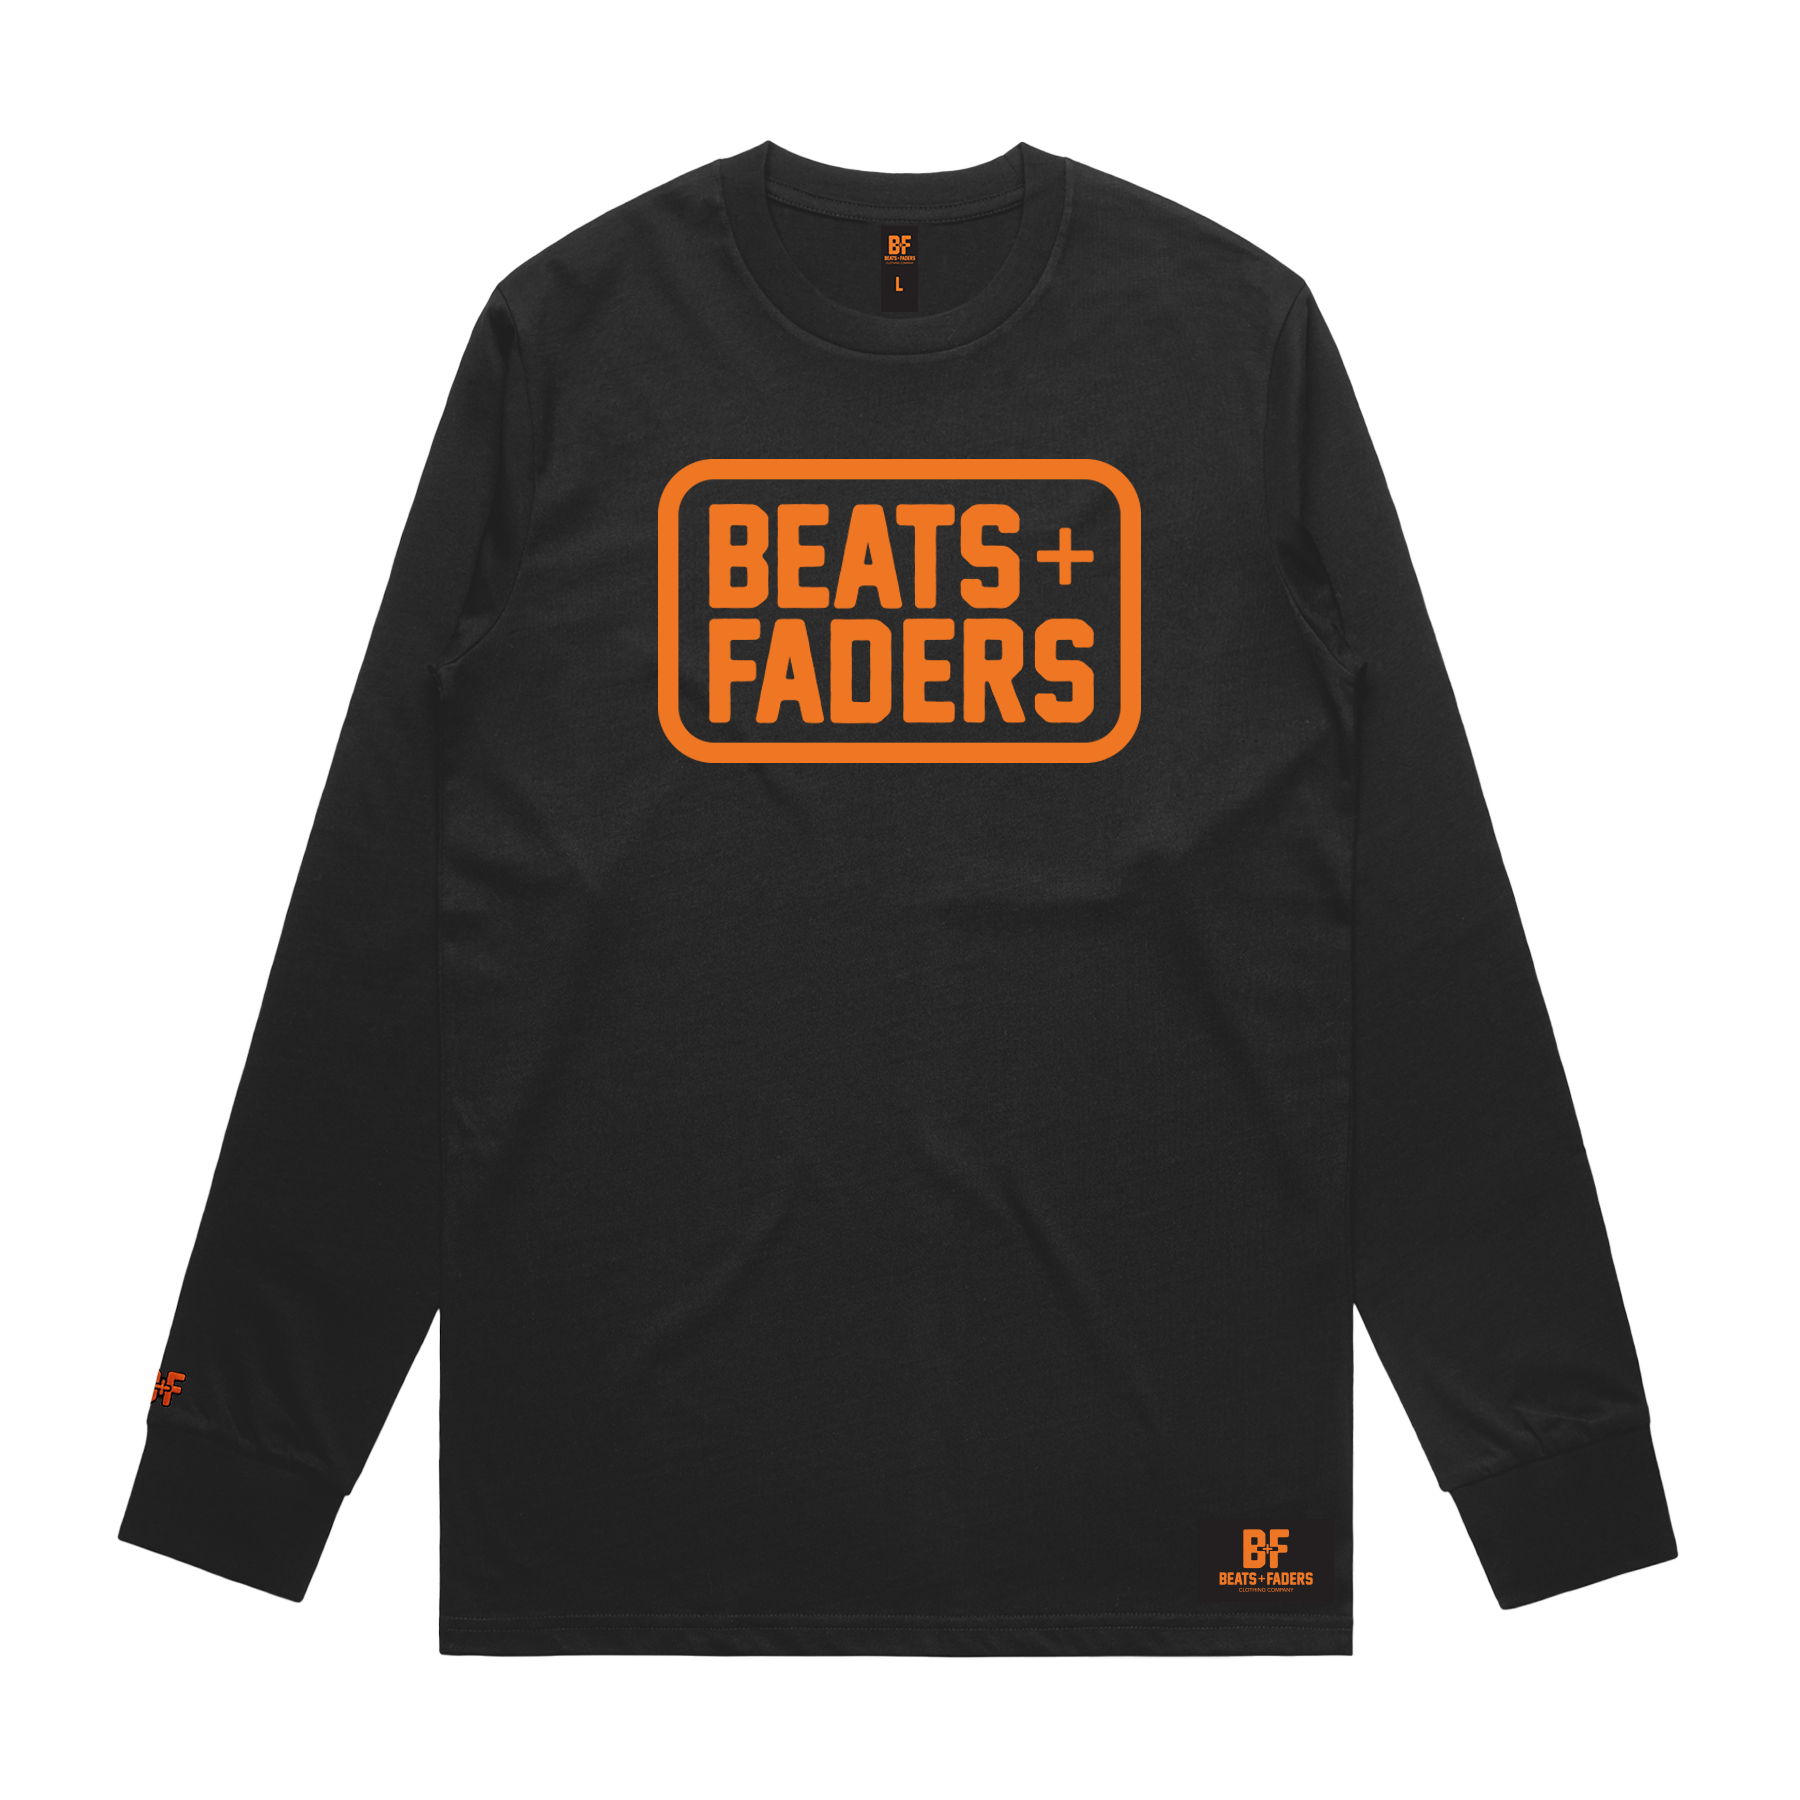 Beats + Faders Clothing Company – Store